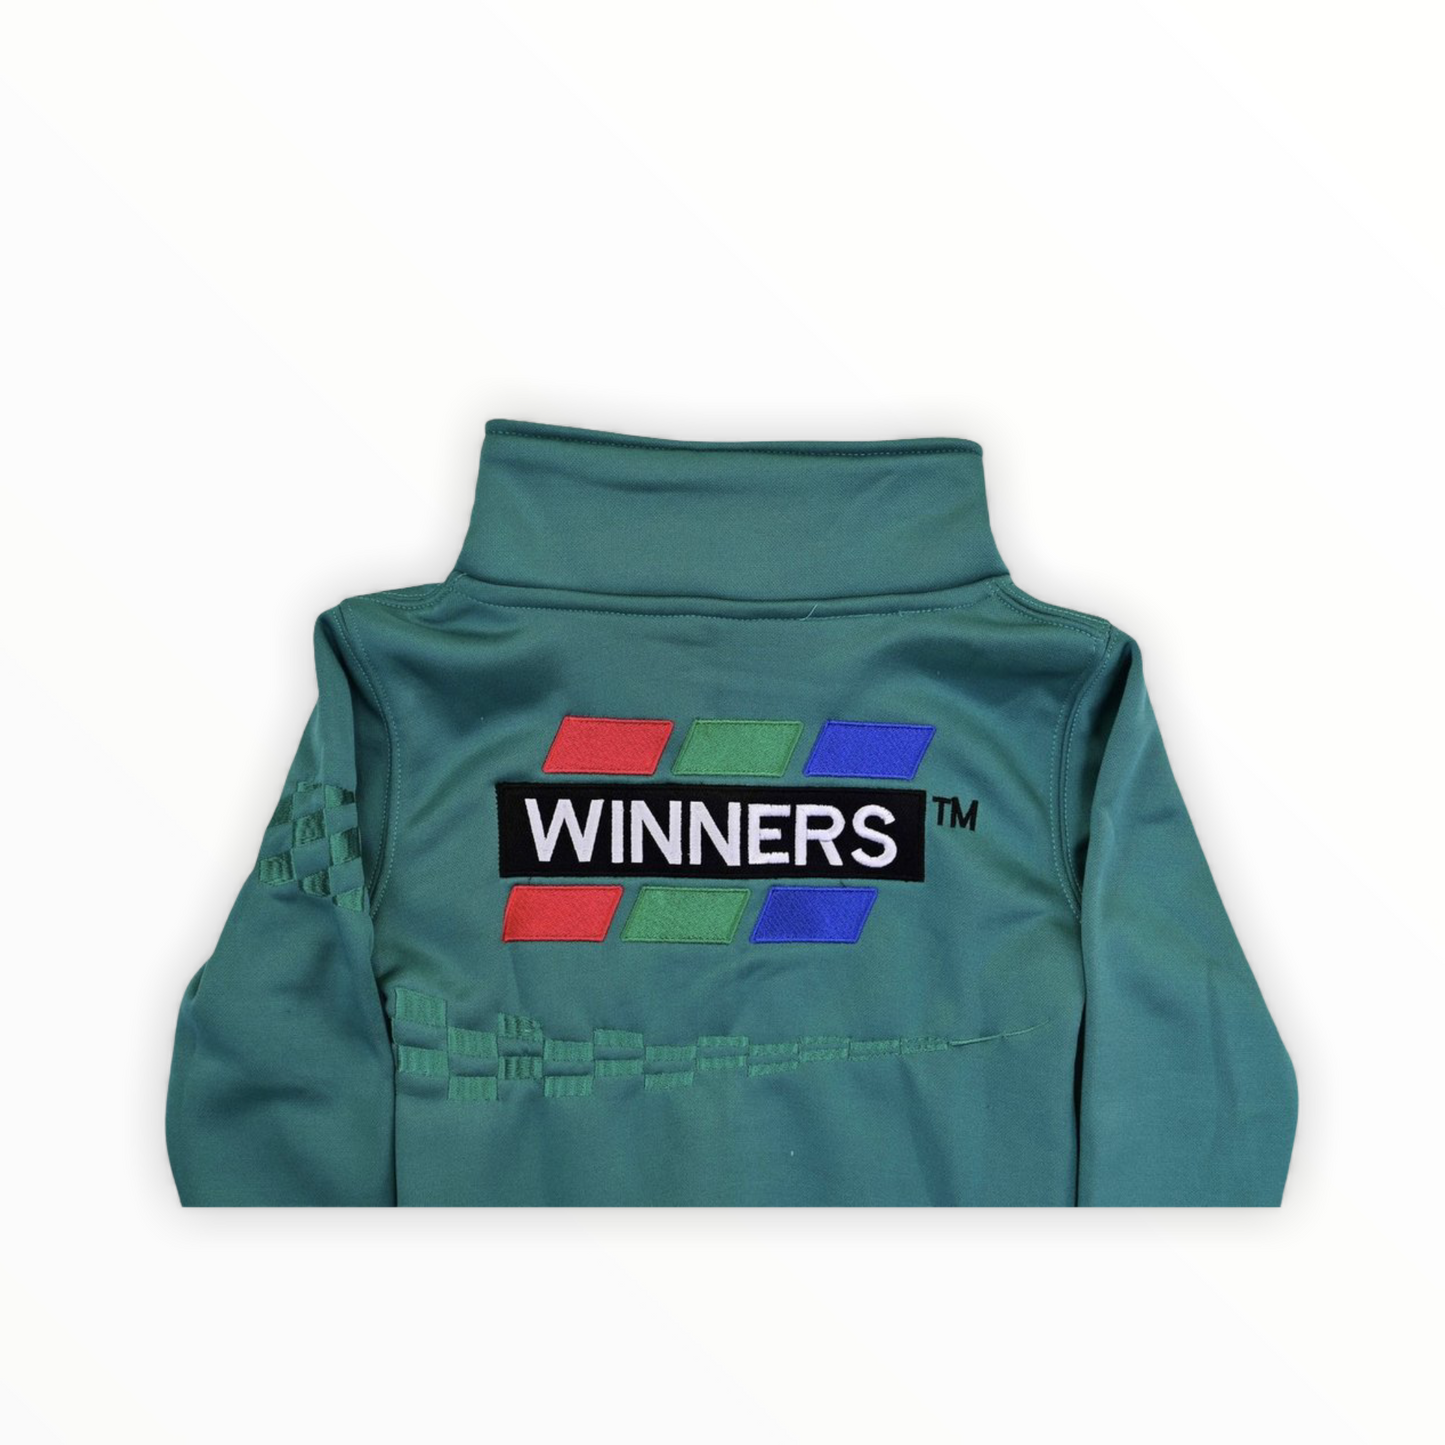 Winners Checkered Track Set Jacket - Winners Green